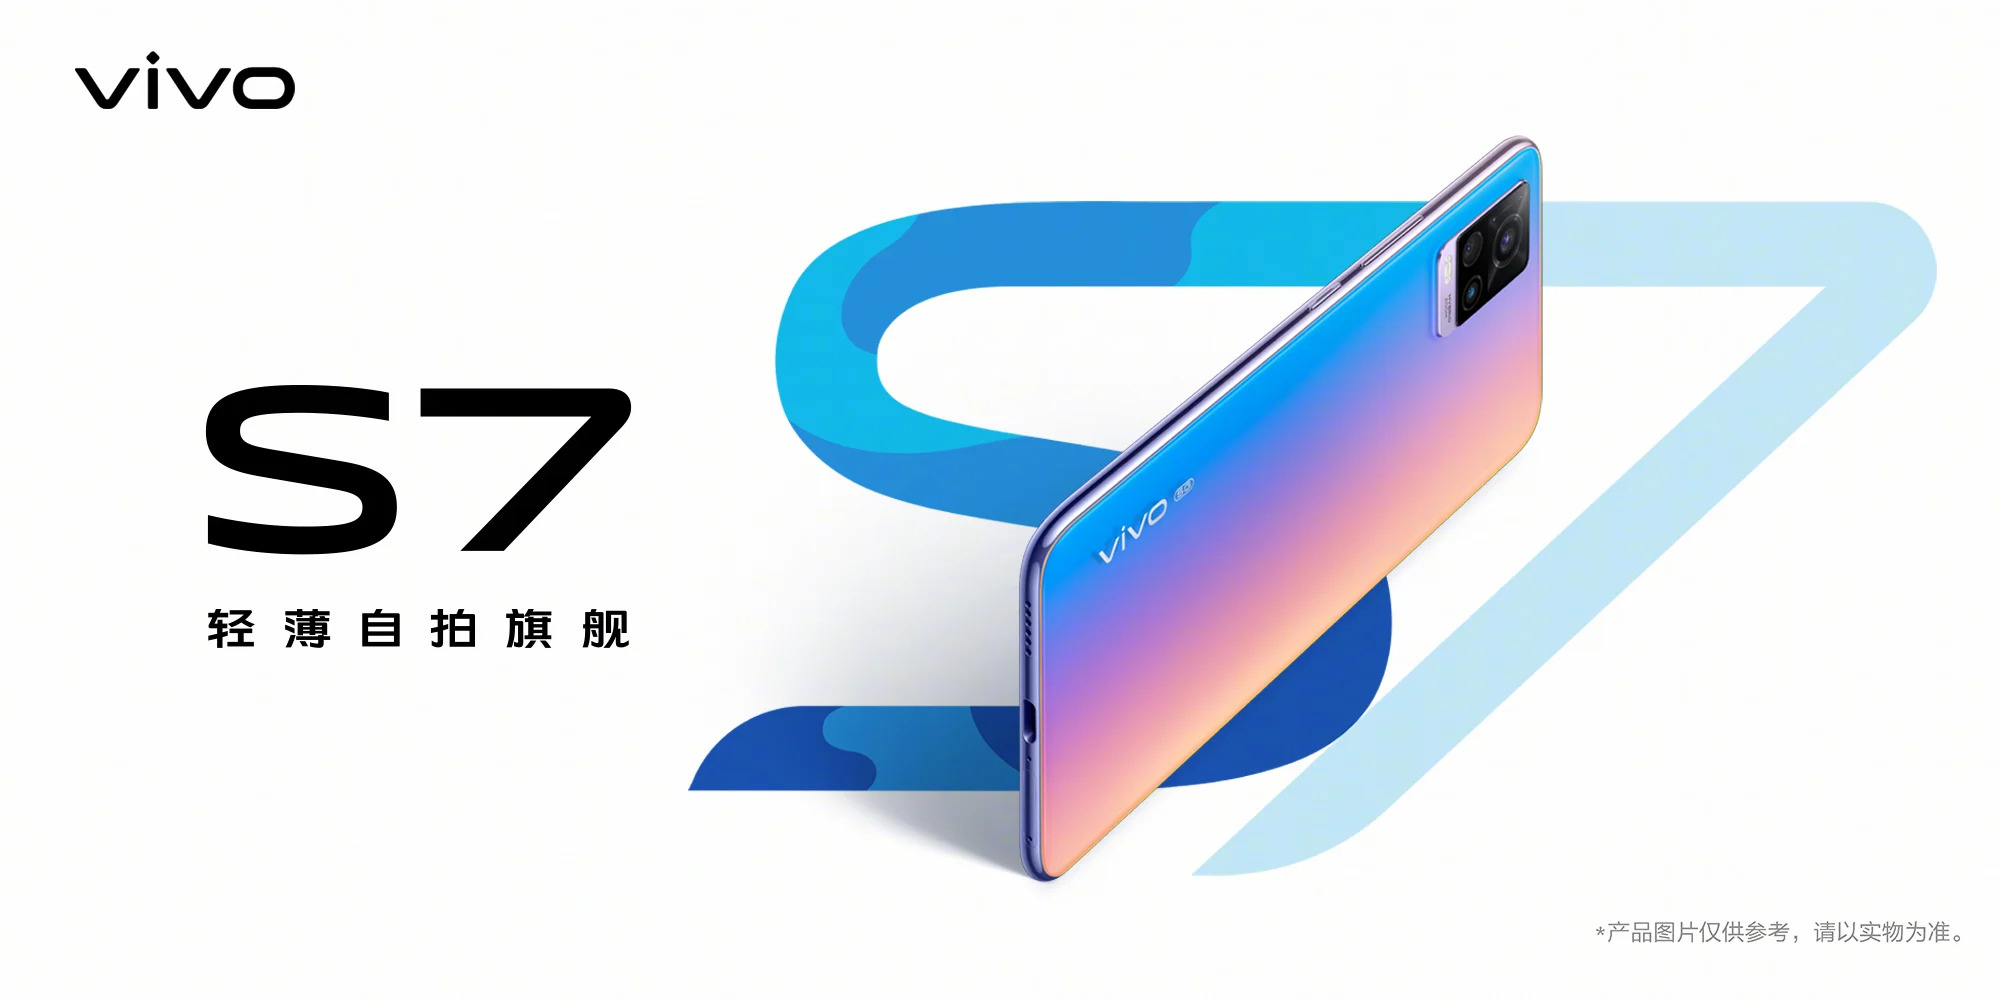 Vivo S7 va fi lansat pe 3 august și va fi extrem de subțire ...